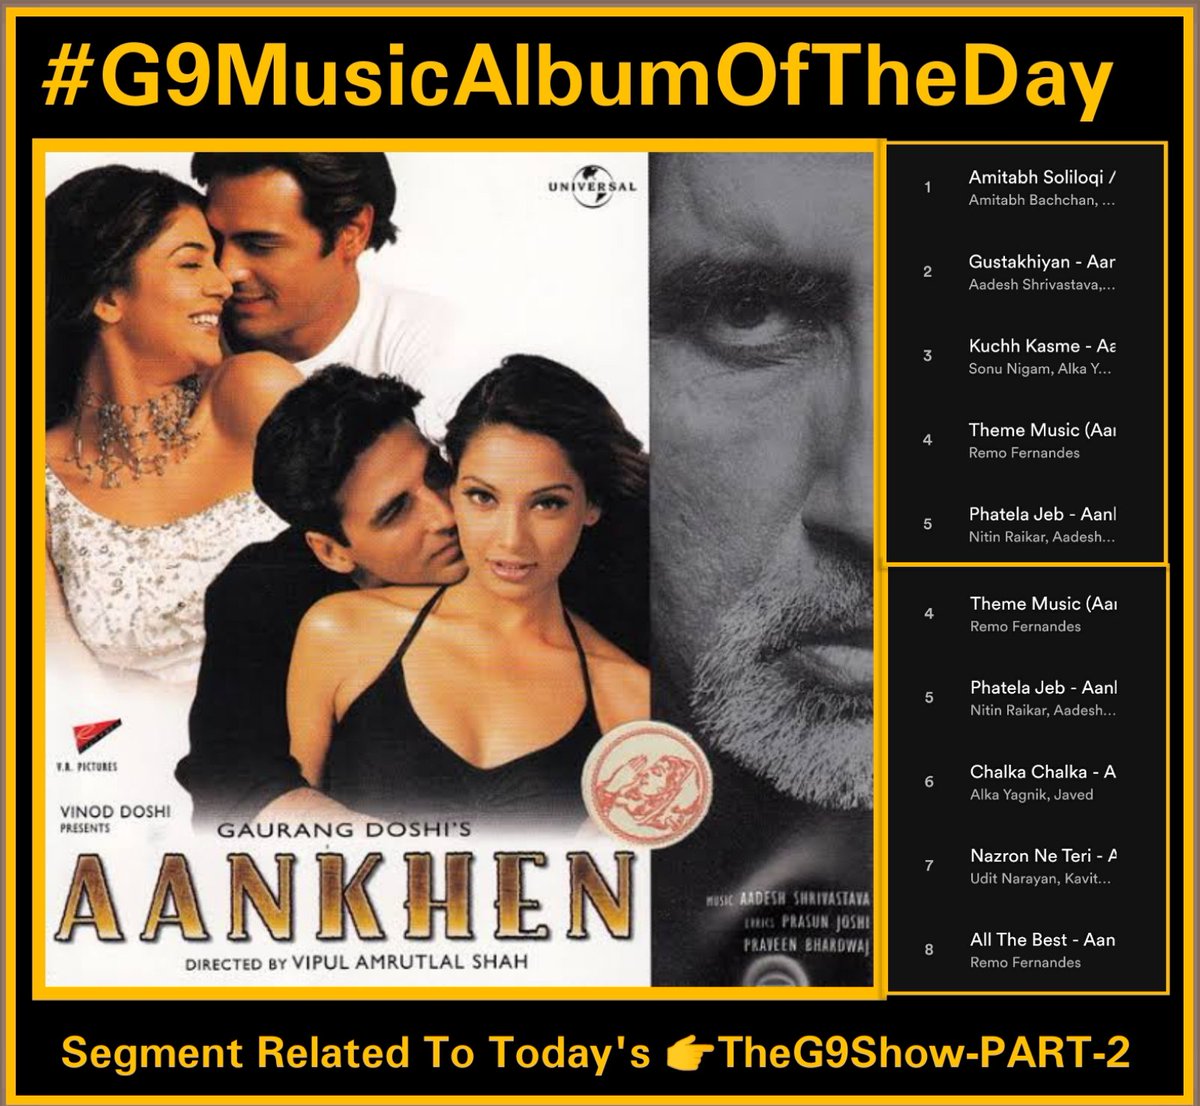 #G9MusicAlbumOfTheDay
#Aankhen(2002) 

🎬 #AmitabhBachchan
🎬 #AkshayKumar
🎬 #SushmitaSen
🎬@rampalarjun &team

🎼 #JatinLalit #AdeshShrivastav

Thnx @DIVYASOLGAMA Sir for including this #MusicalSegment in 2day's #TheG9ShowPart2📻

👉Timing Mon-Fri(3-4pm)
 Mum 91.9FM-Kol 94.3FM